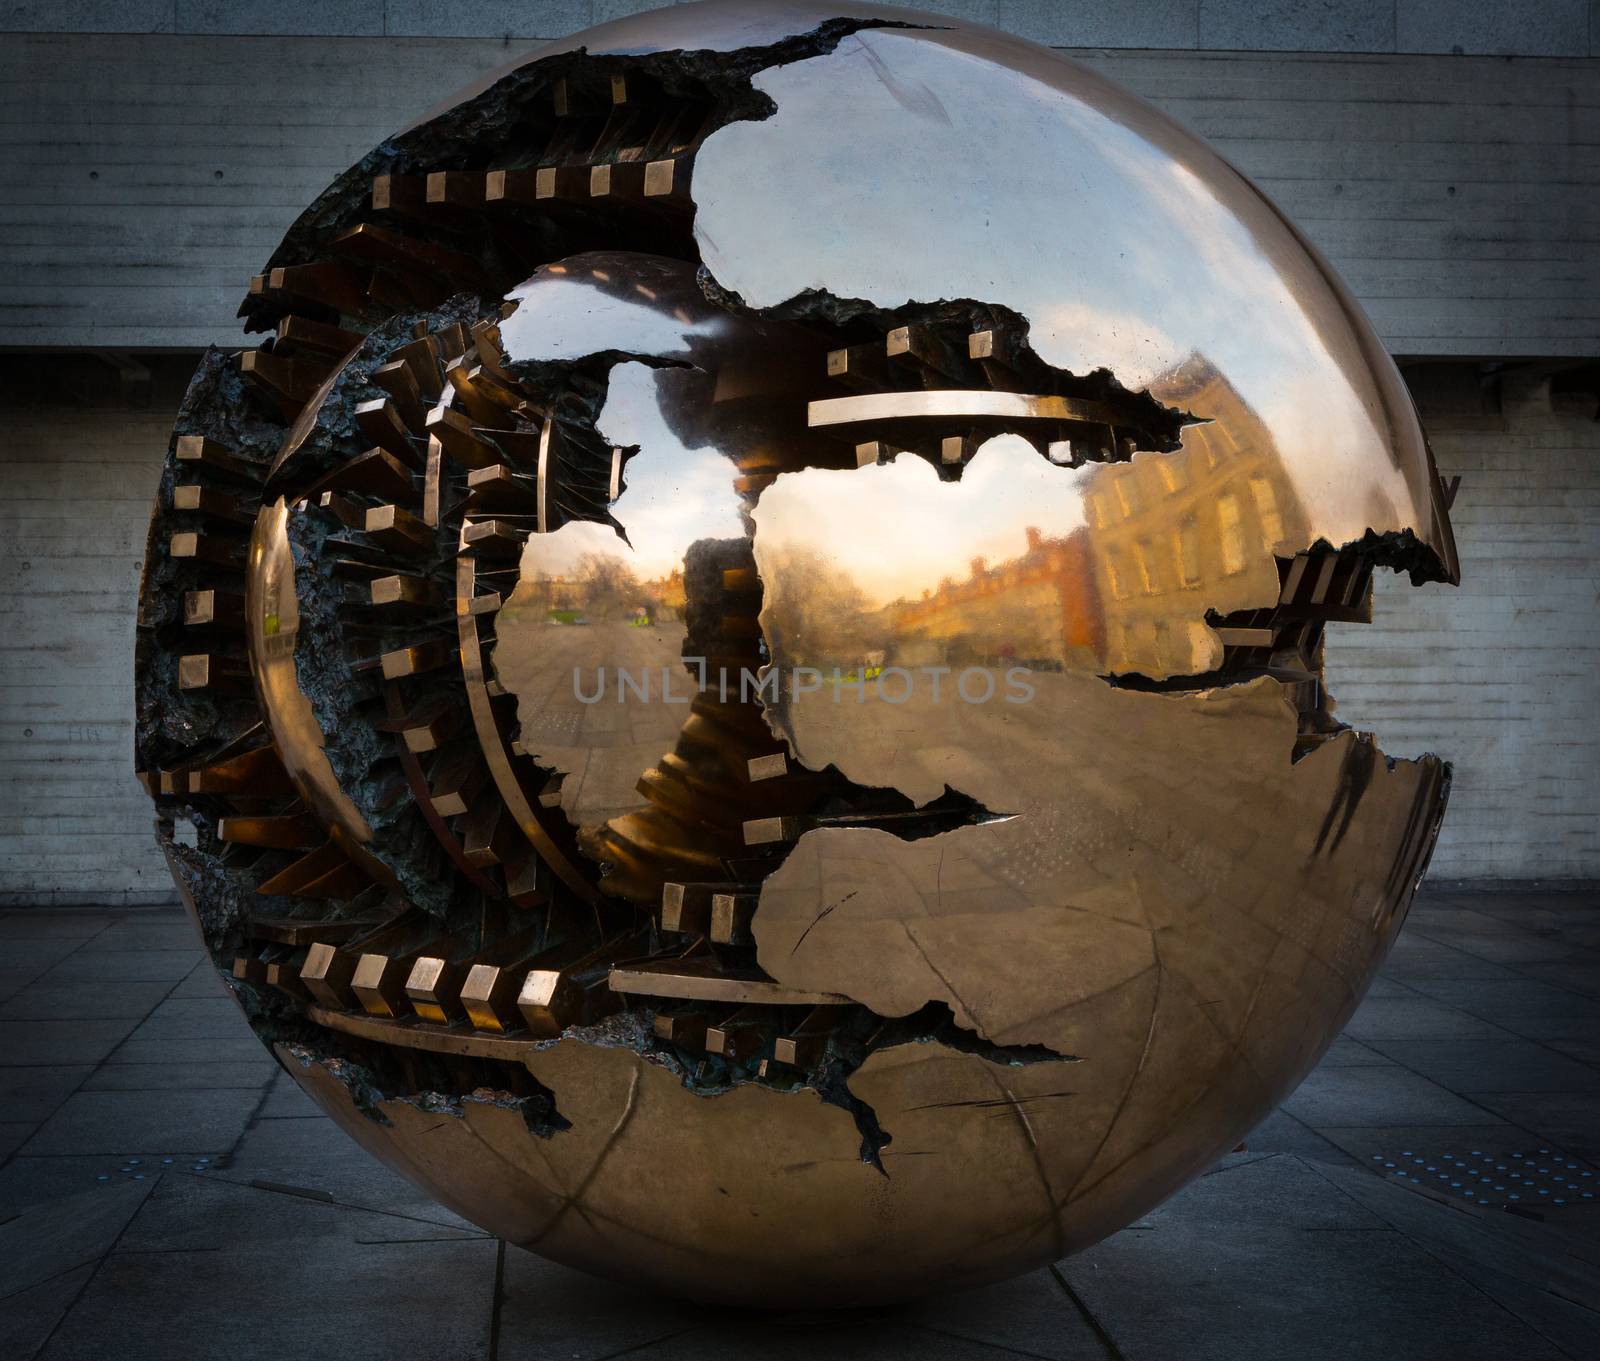 DUBLIN, IRELAND - JAN 20, 2017: Sphere Within Sphere is a bronze sculpture in Trinity College by mlechanteur